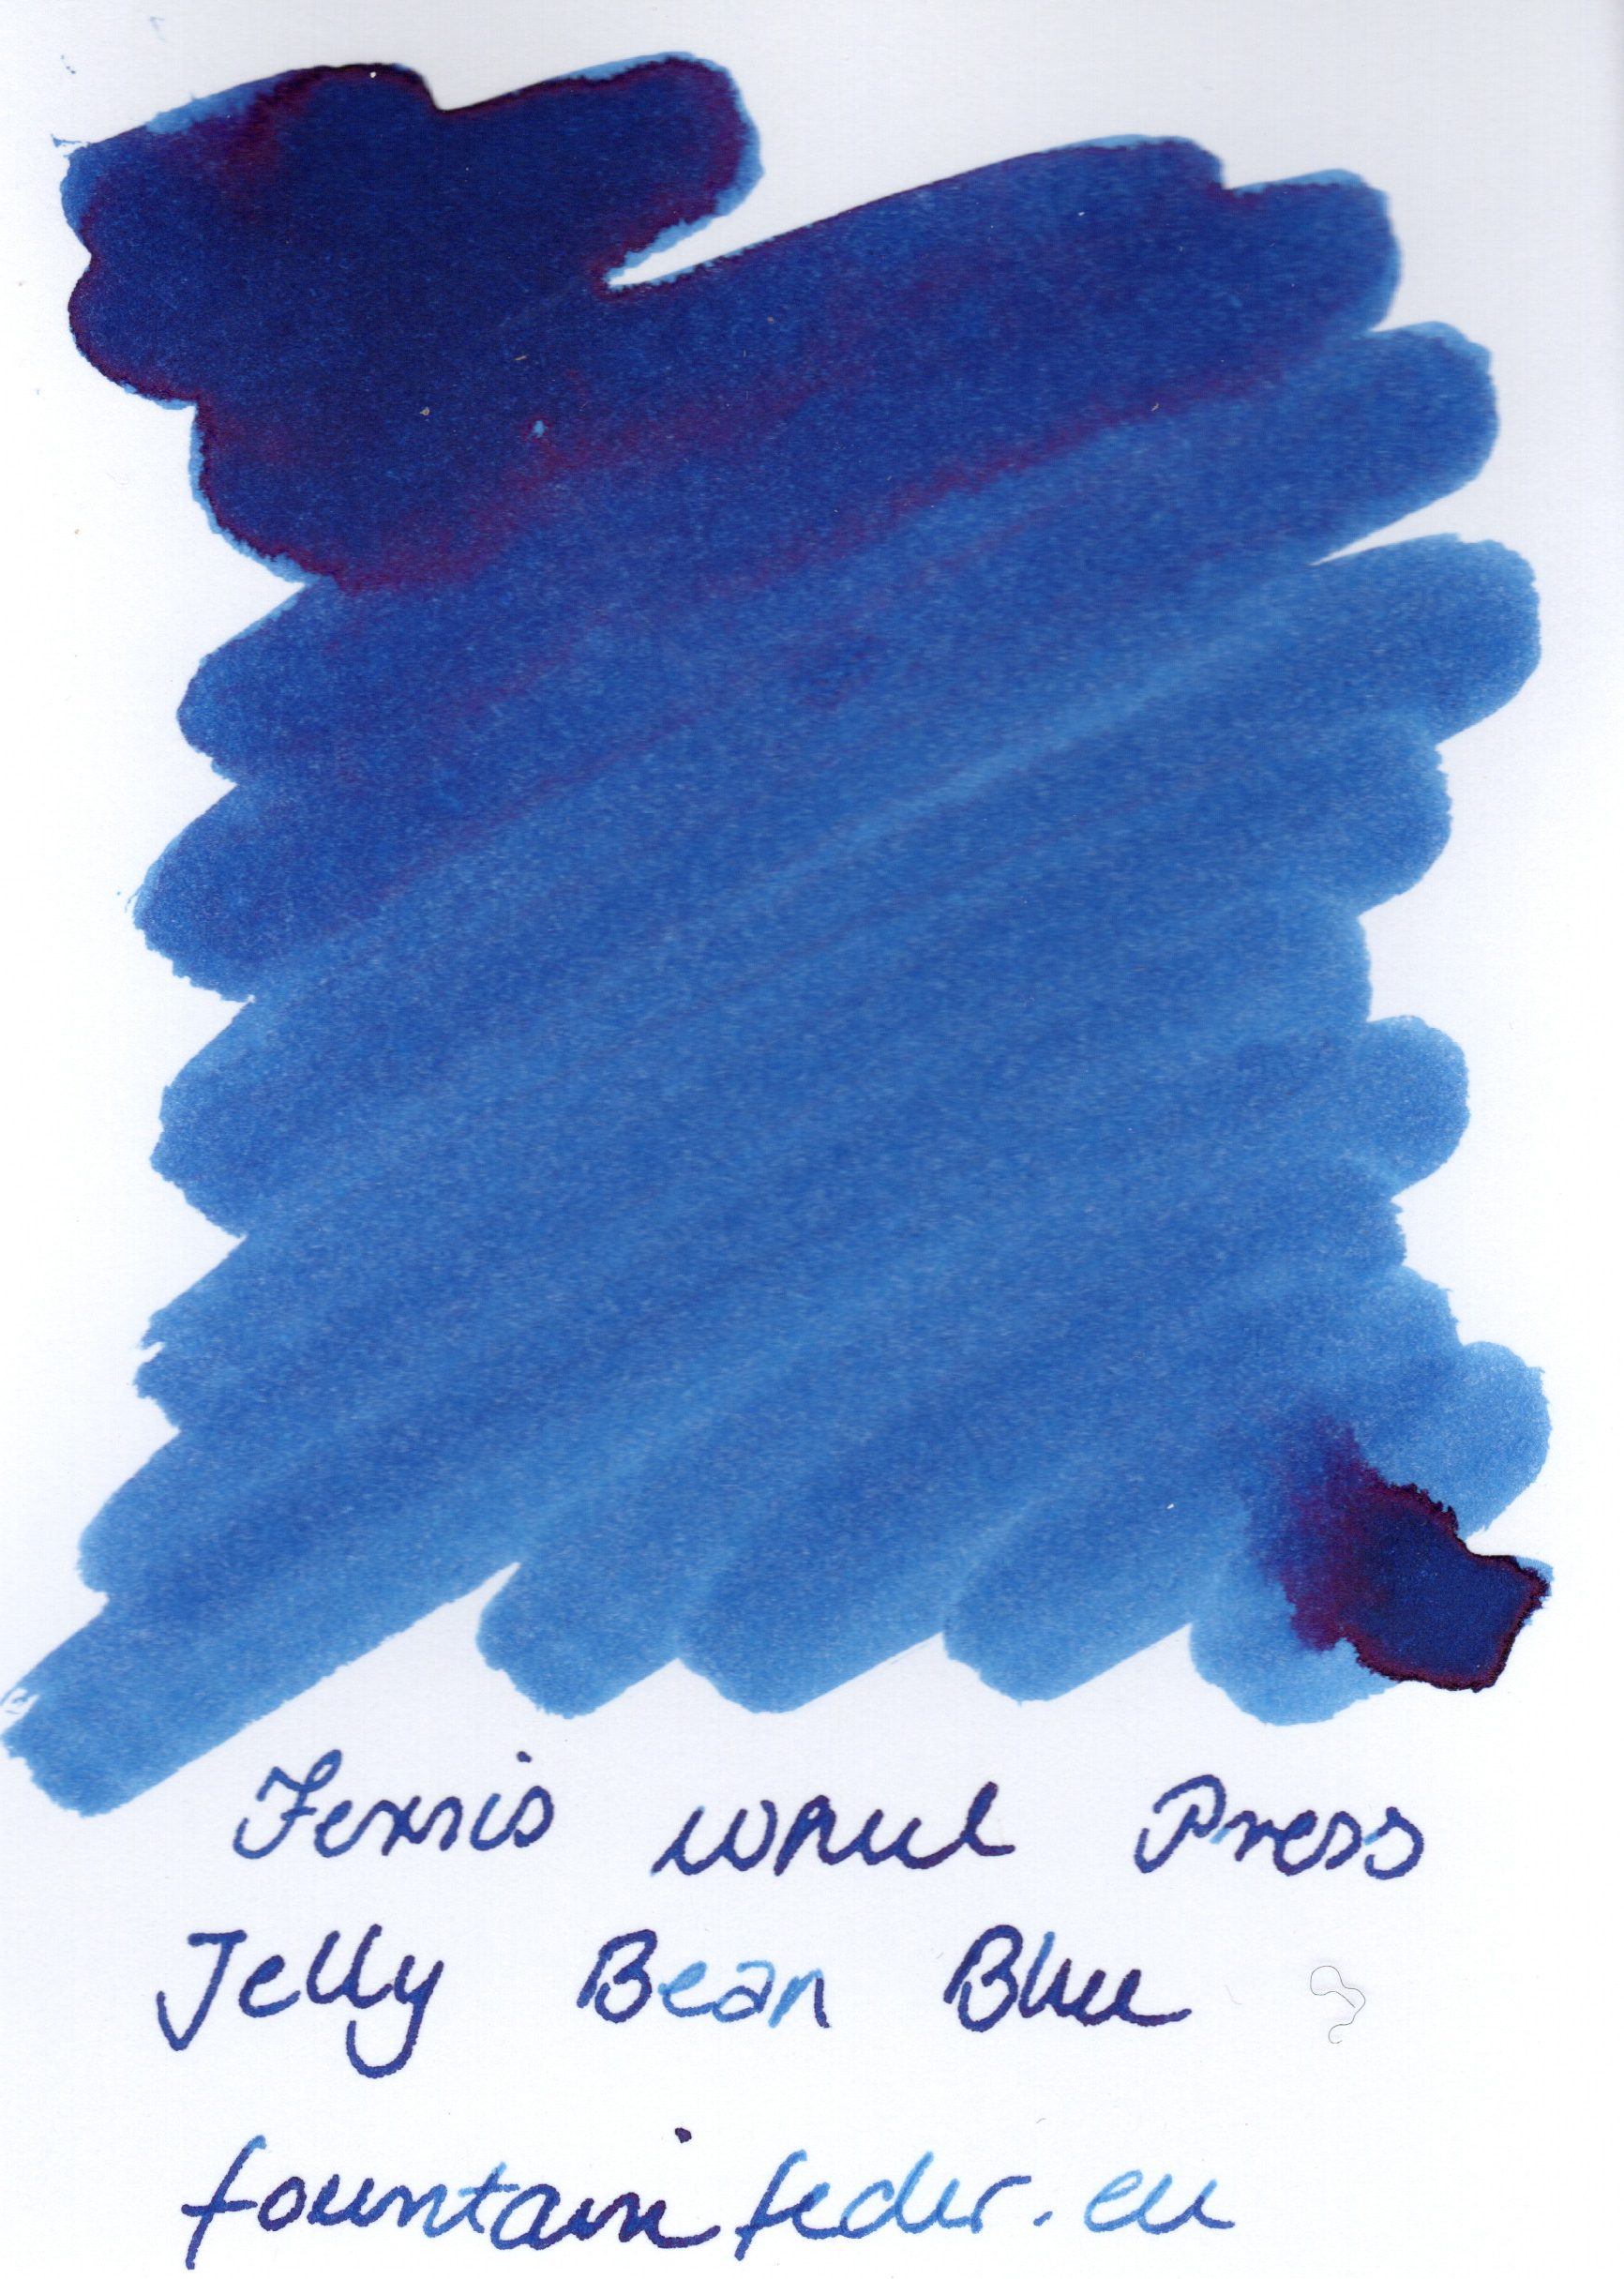 Ferris Wheel Press - Jelly Bean Blue Ink Sample 2ml